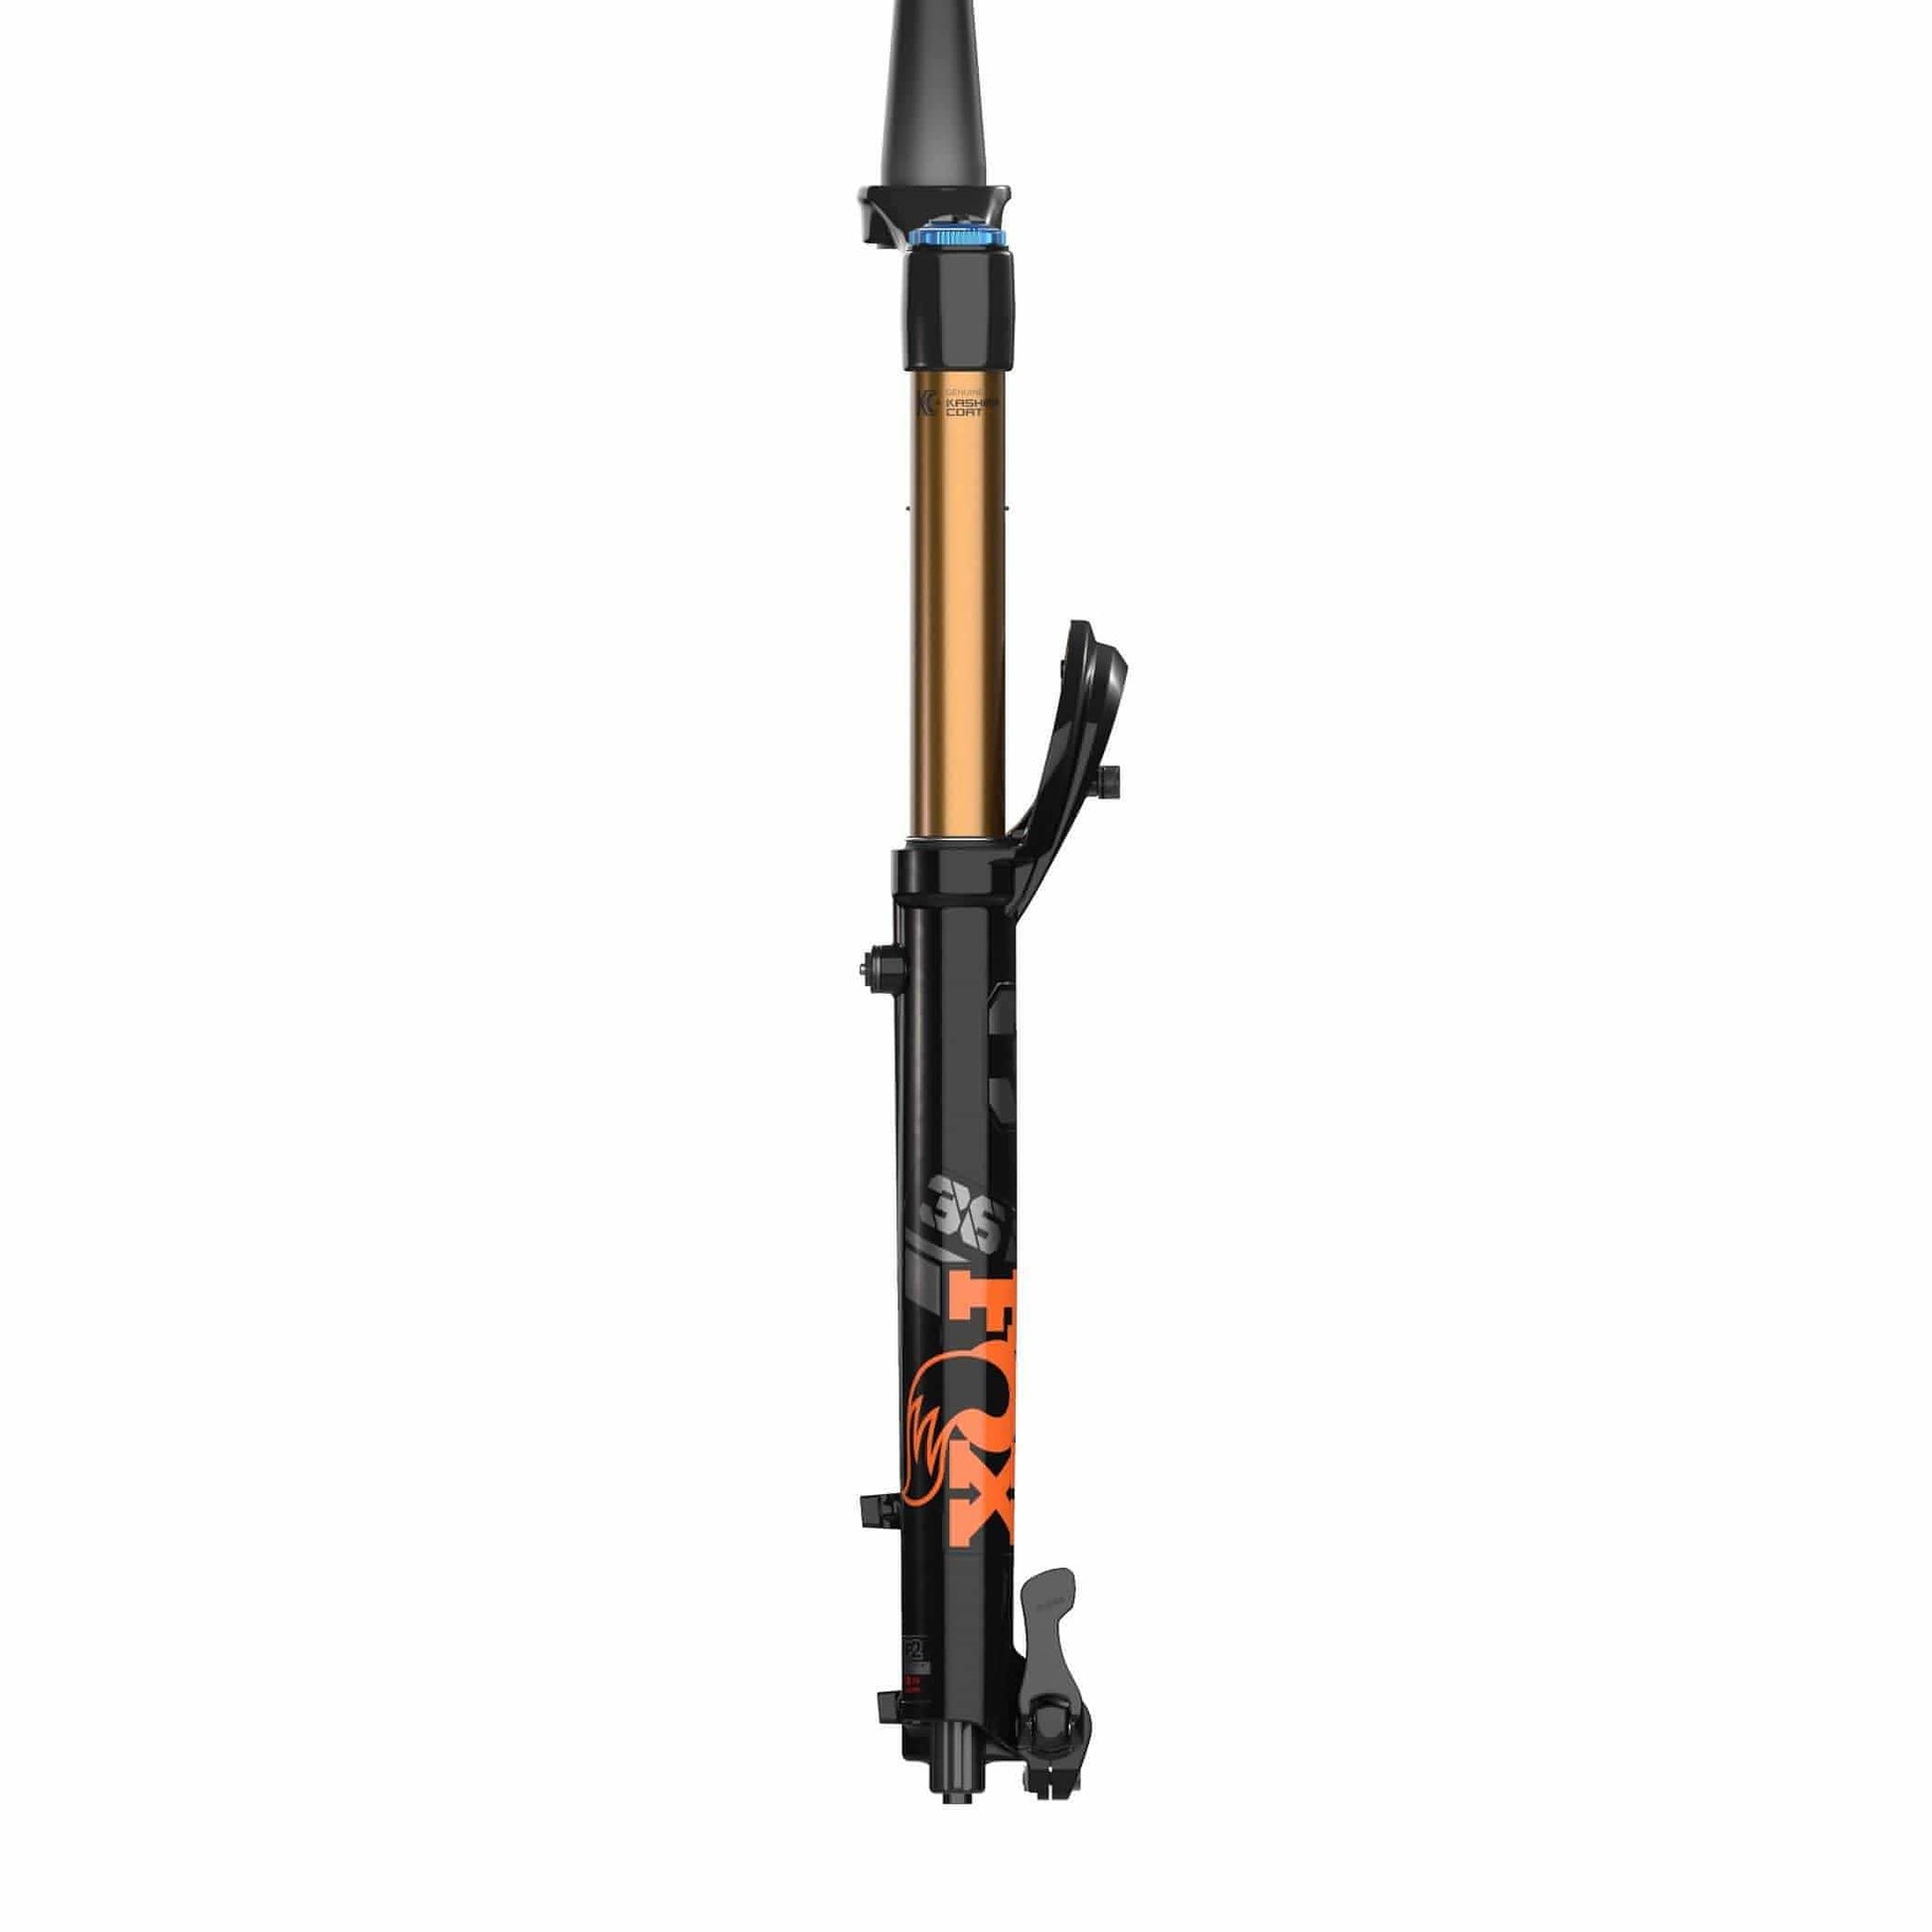 Fox 36 Float Factory 27.5" GRIP2 44mm Offset BOOST Tapered Suspension Fork 2022 - Black 821973418803 - Start Fitness